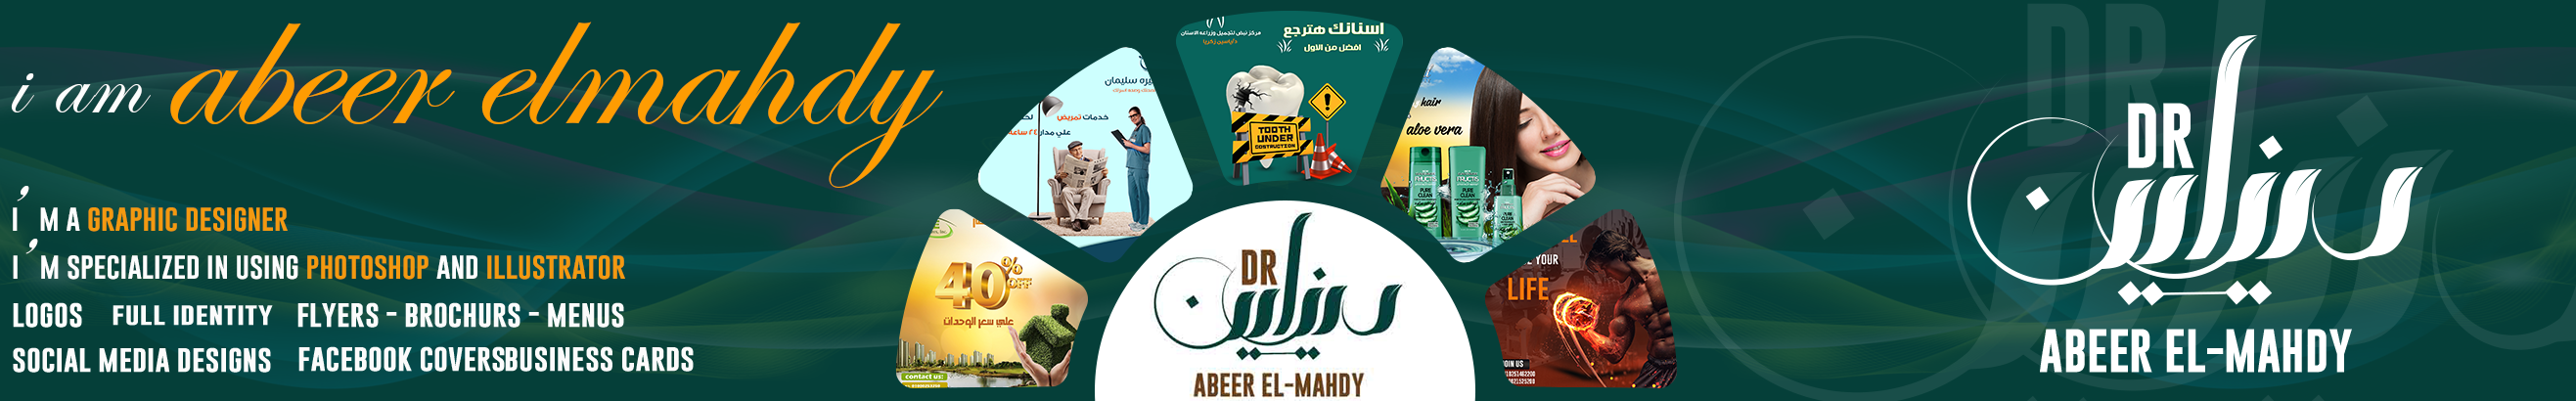 Banner del profilo di Abeer Elmahdy